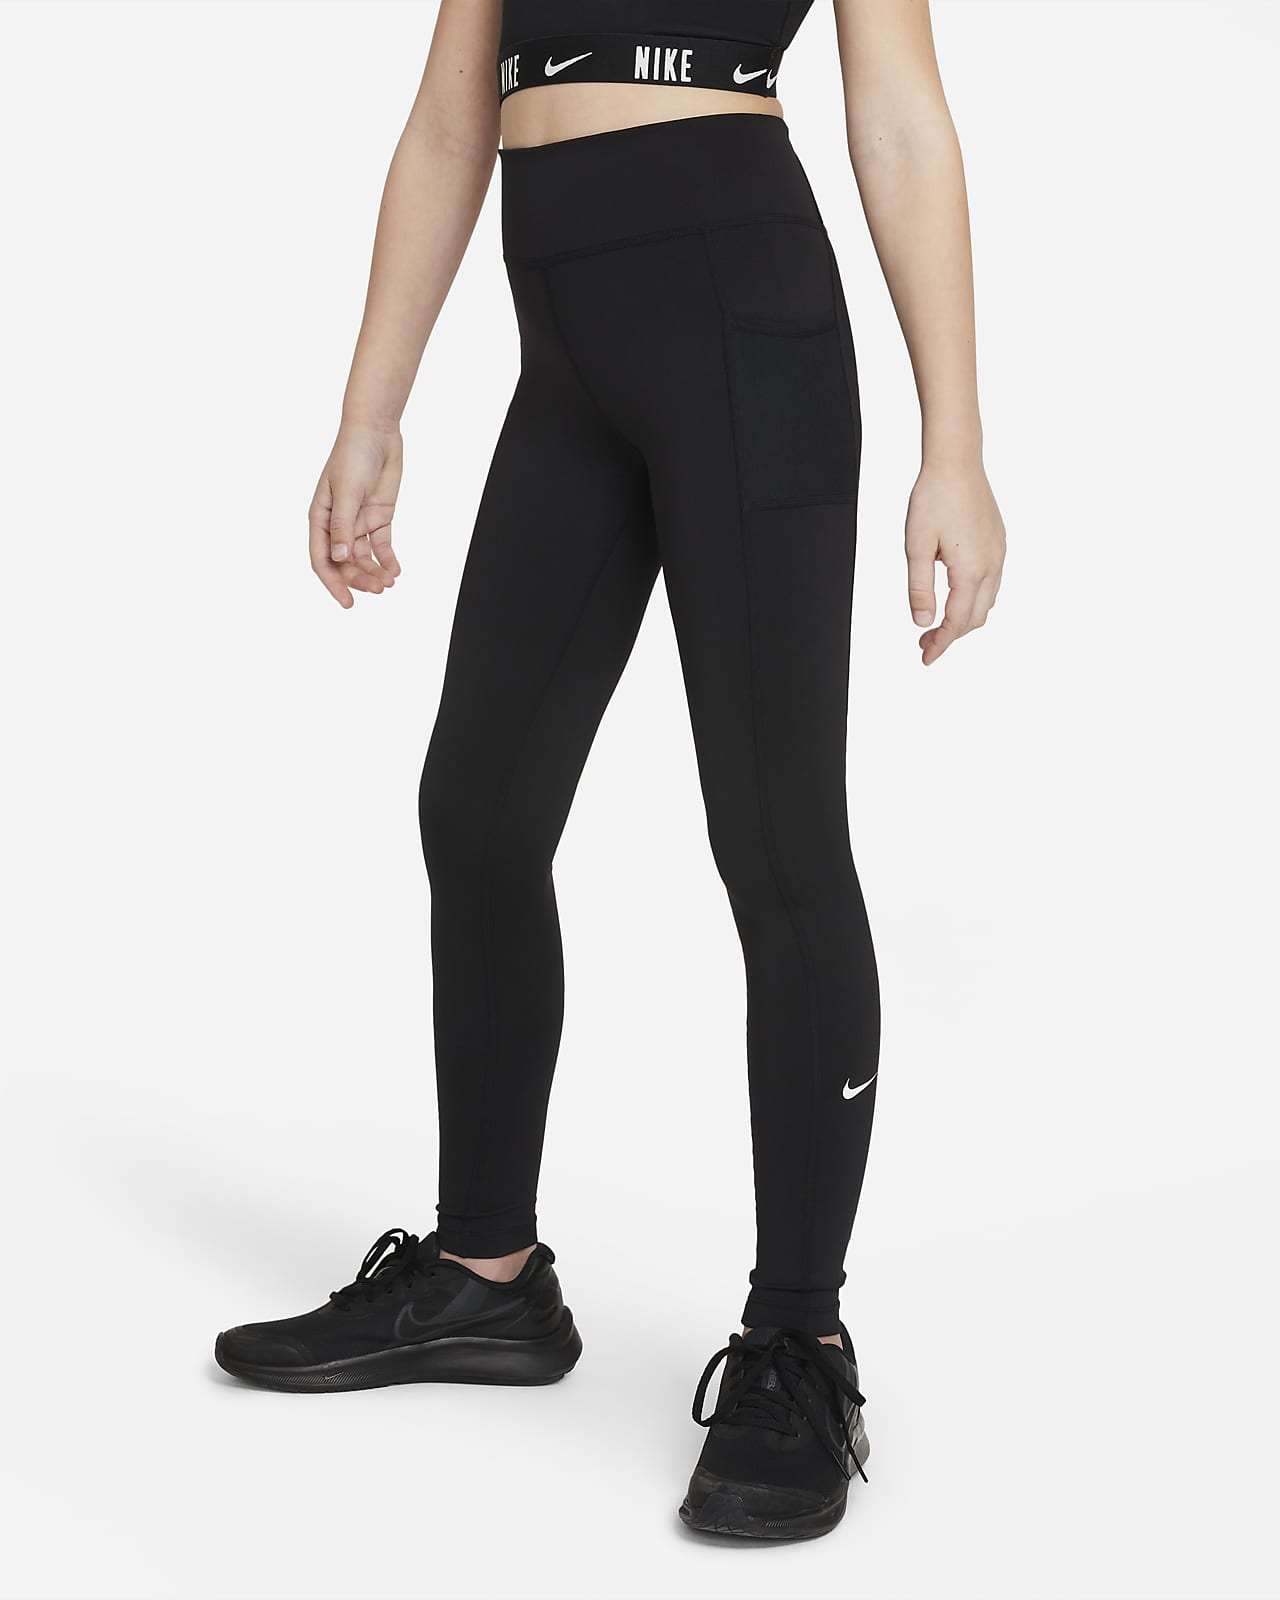 Nike Dri Fit One 7/8 Graphic Leggings Grey | Traininn